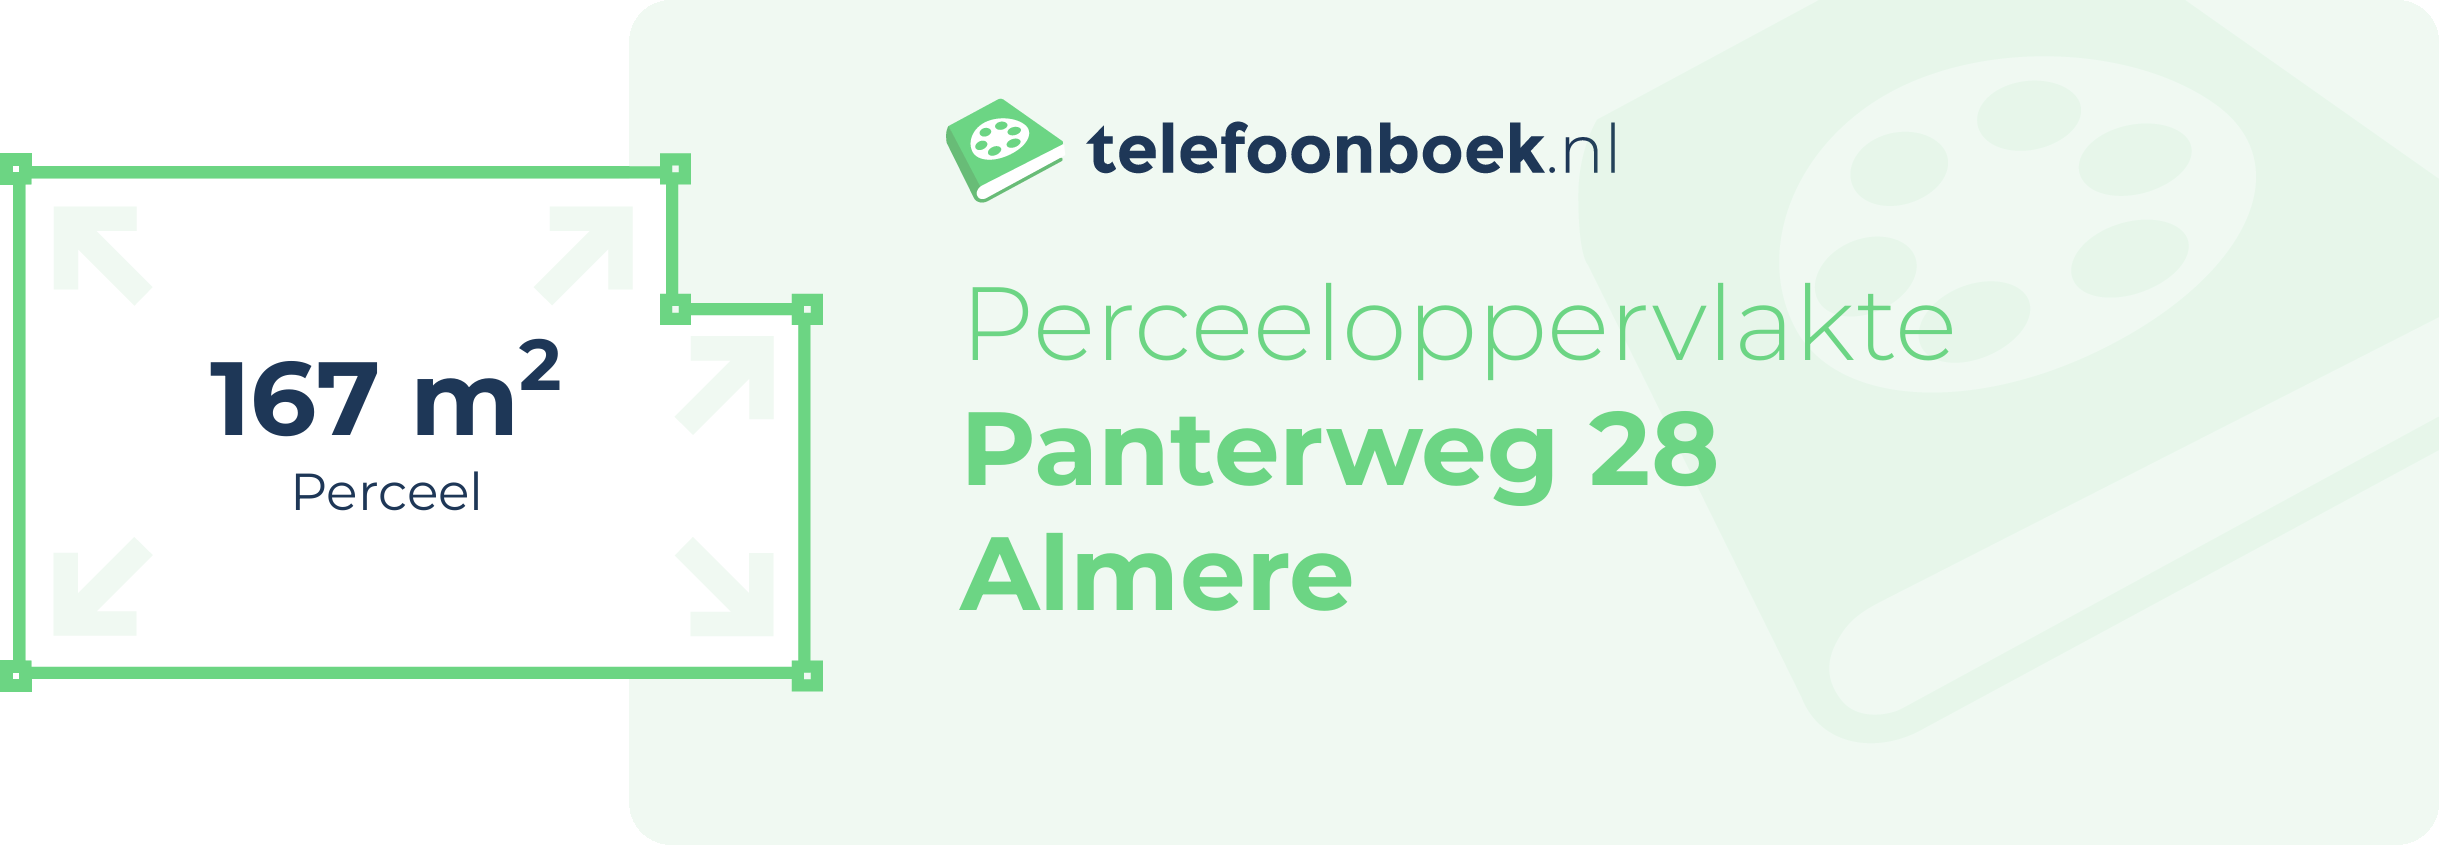 Perceeloppervlakte Panterweg 28 Almere